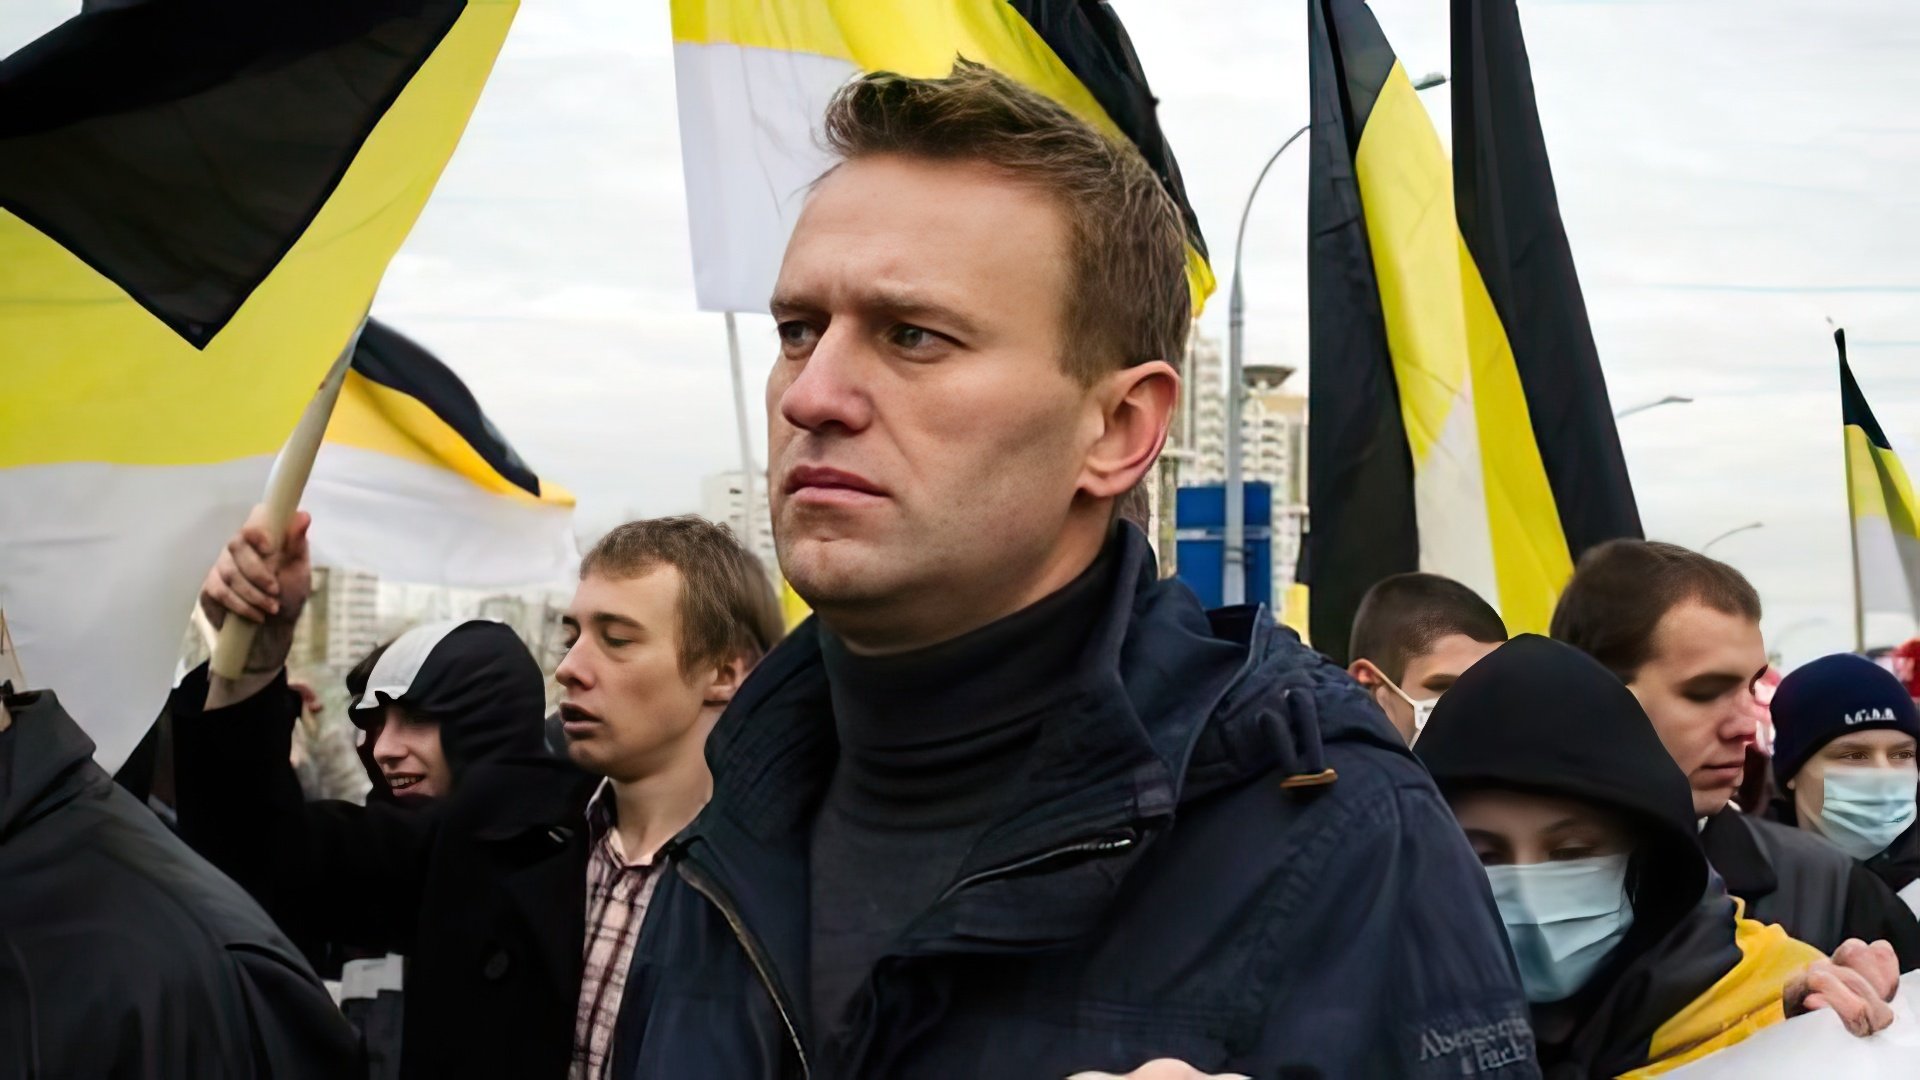 Alexey Navalny adheres to nationalist views